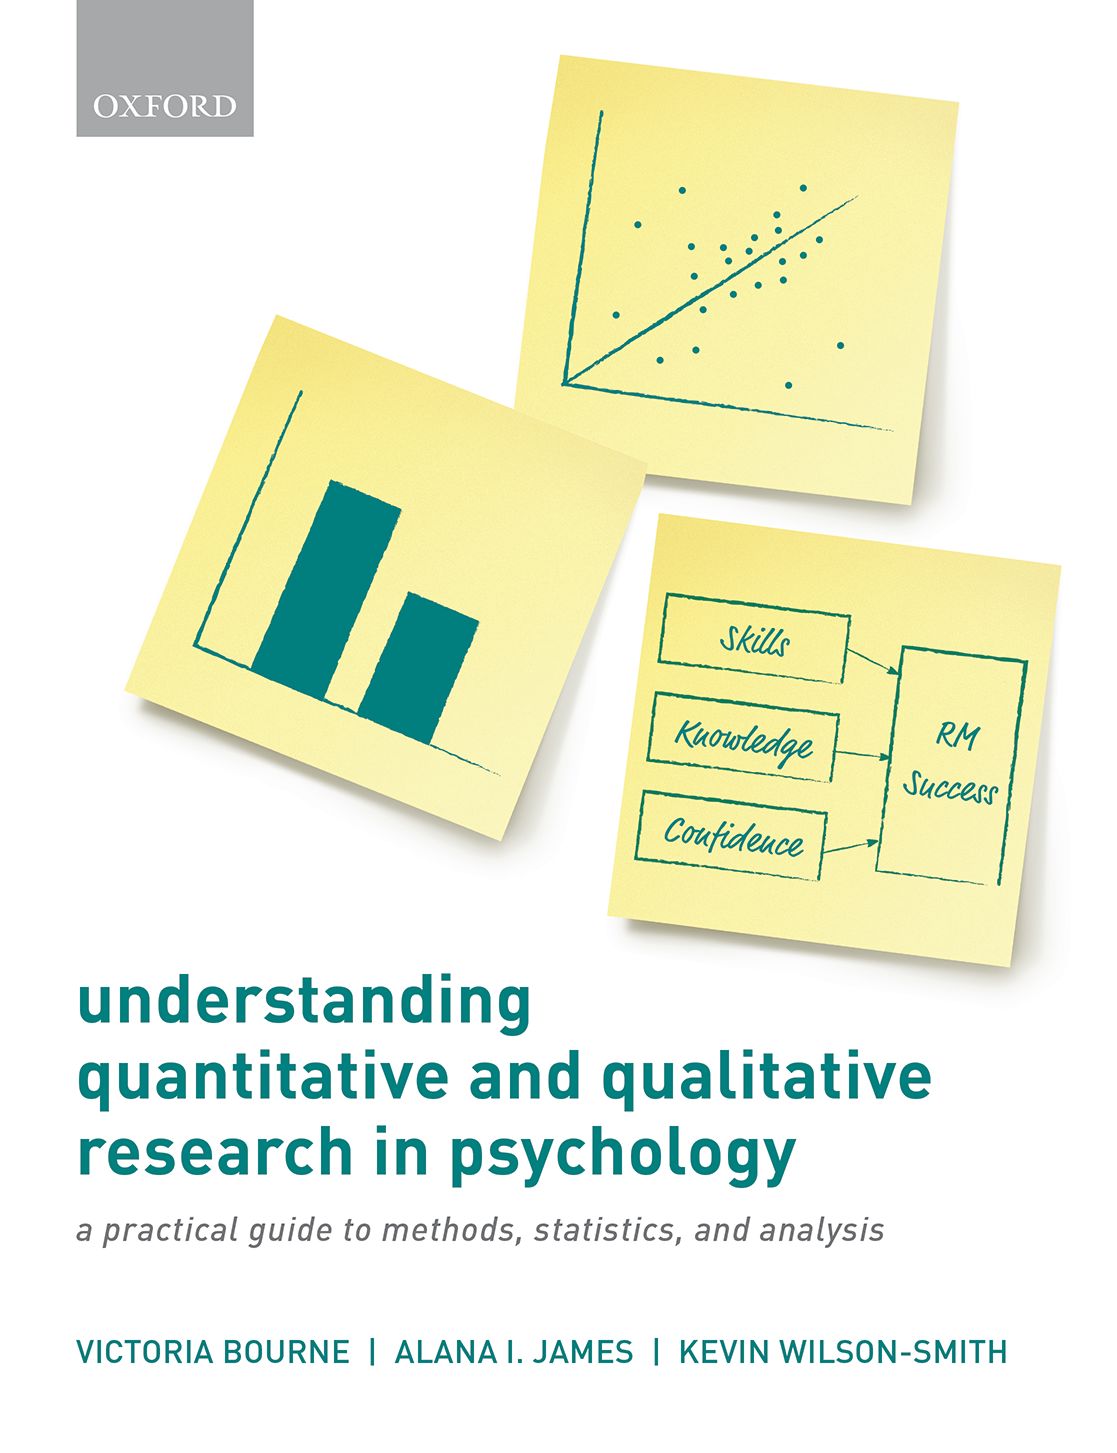 quantitative research psychology case study